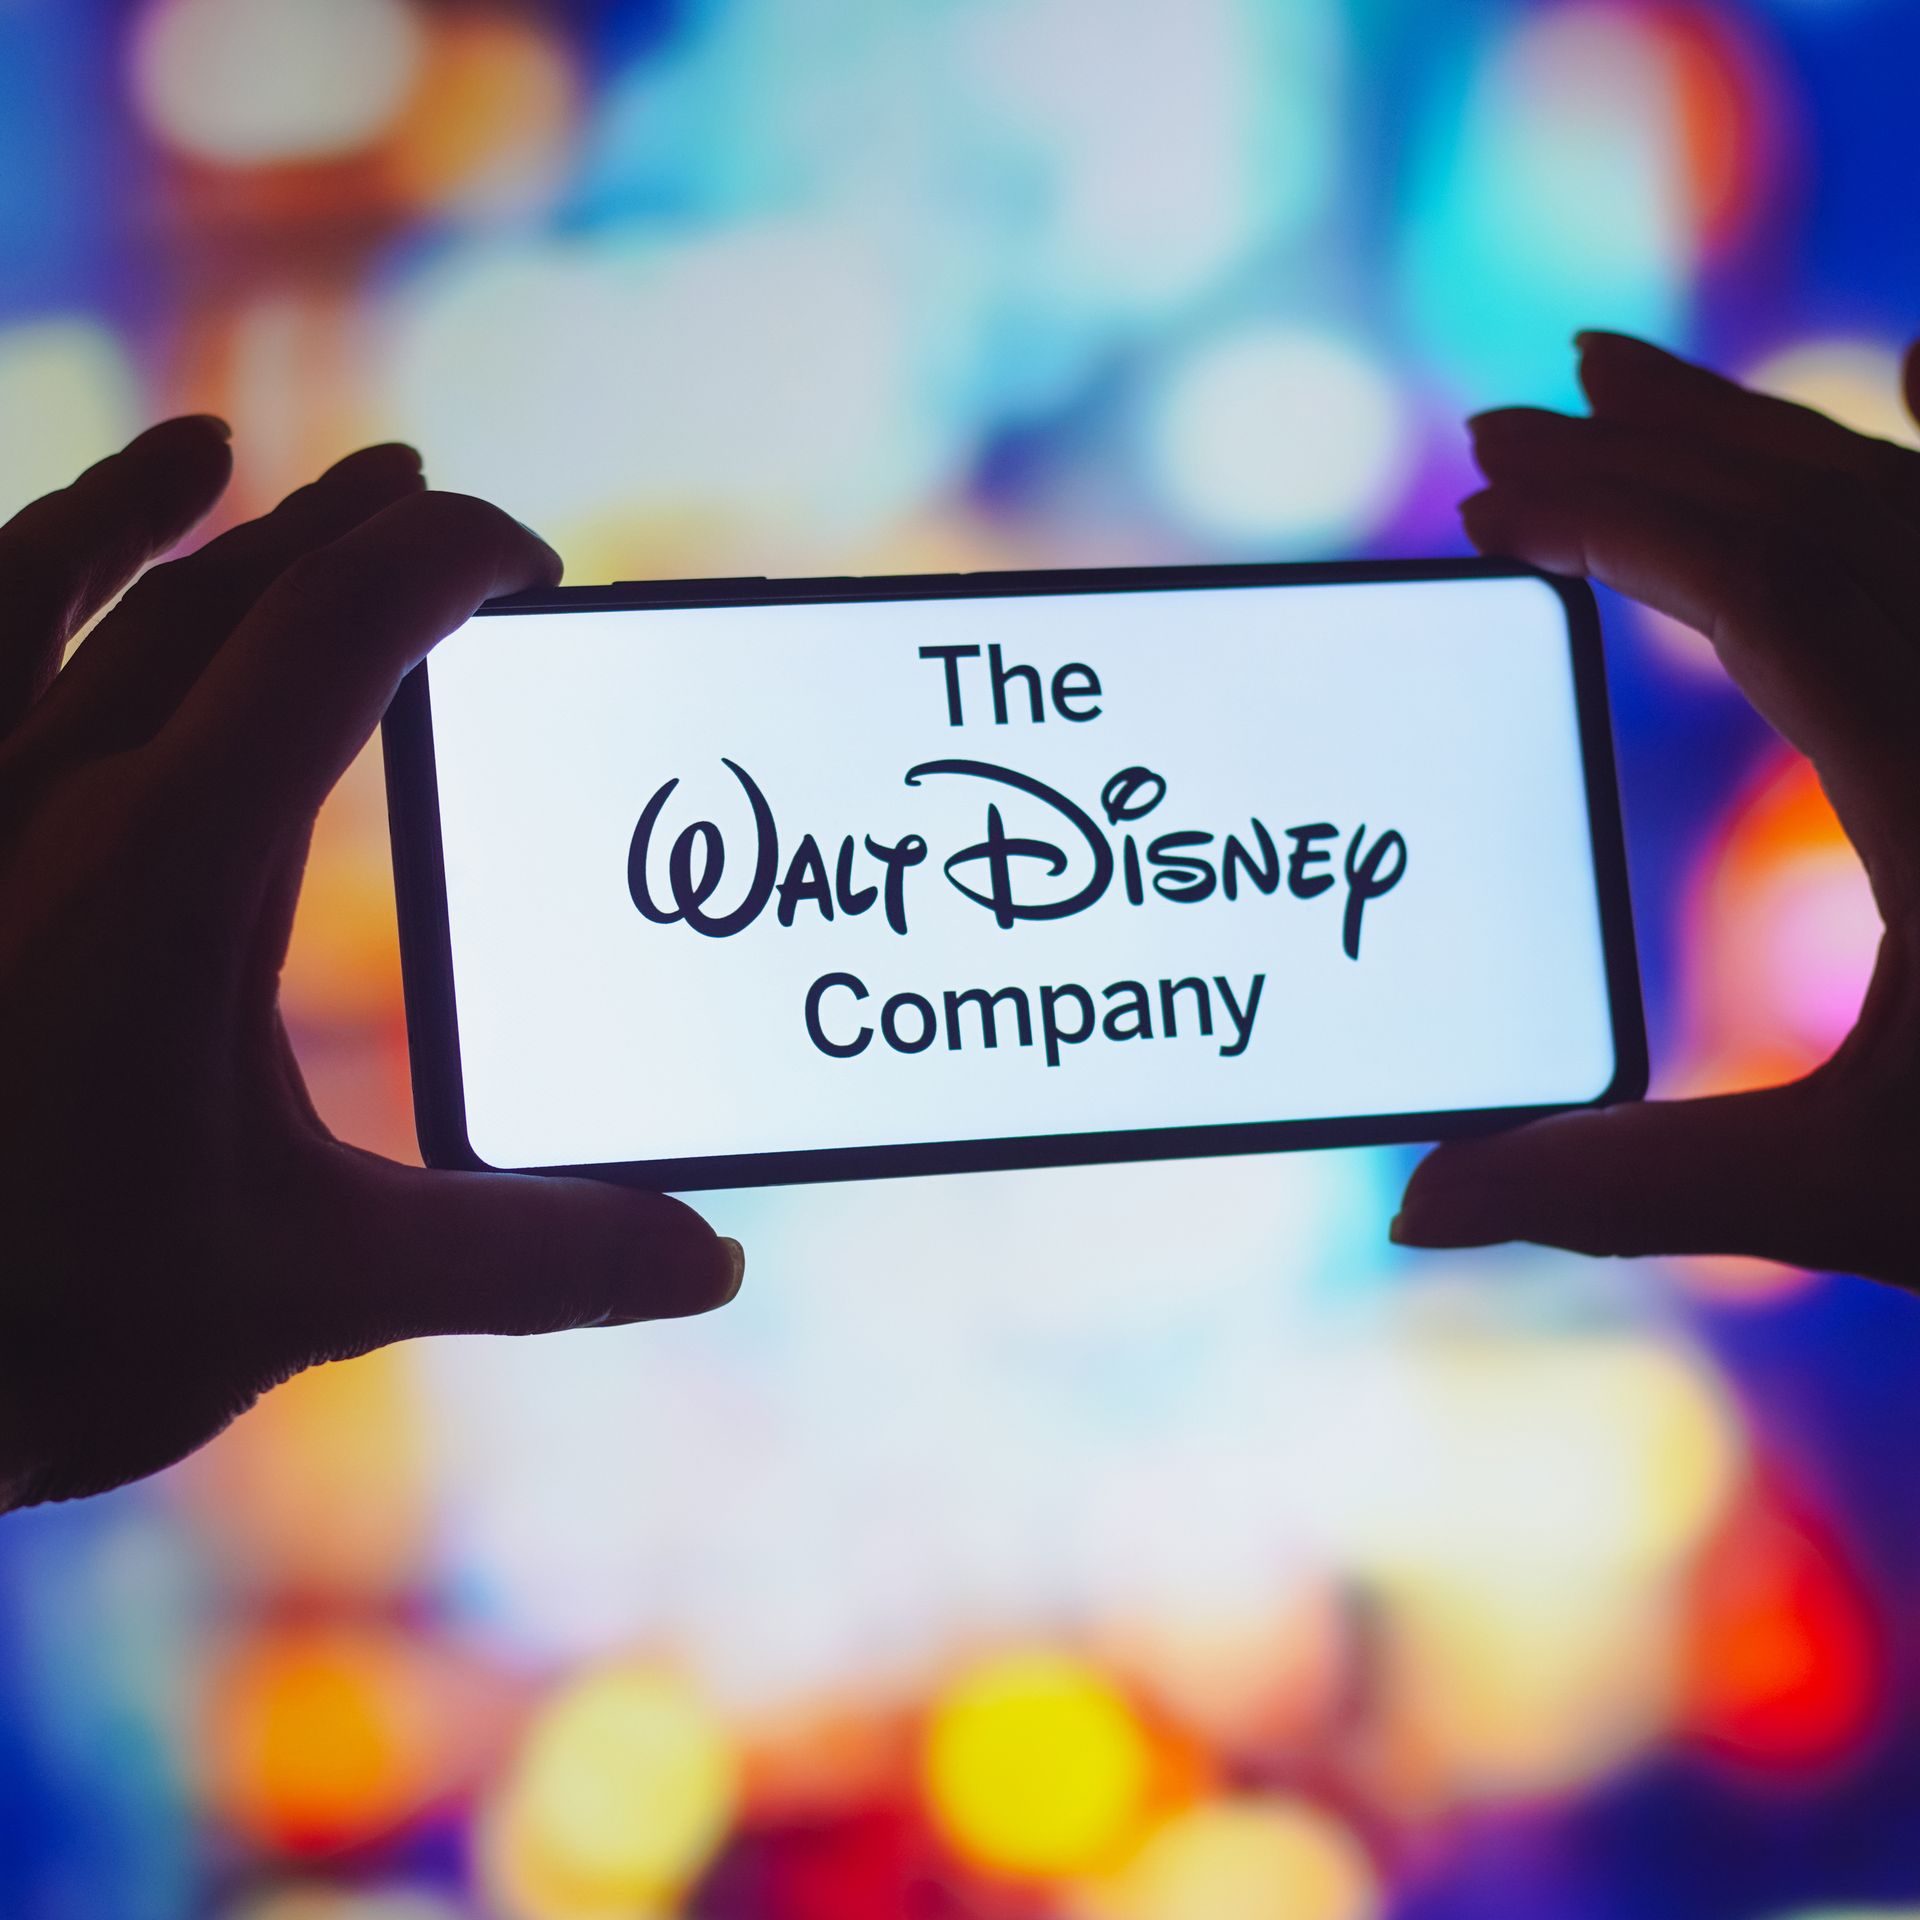 Disney Just Passed Netflix In Total Streaming Subscribers – Deadline